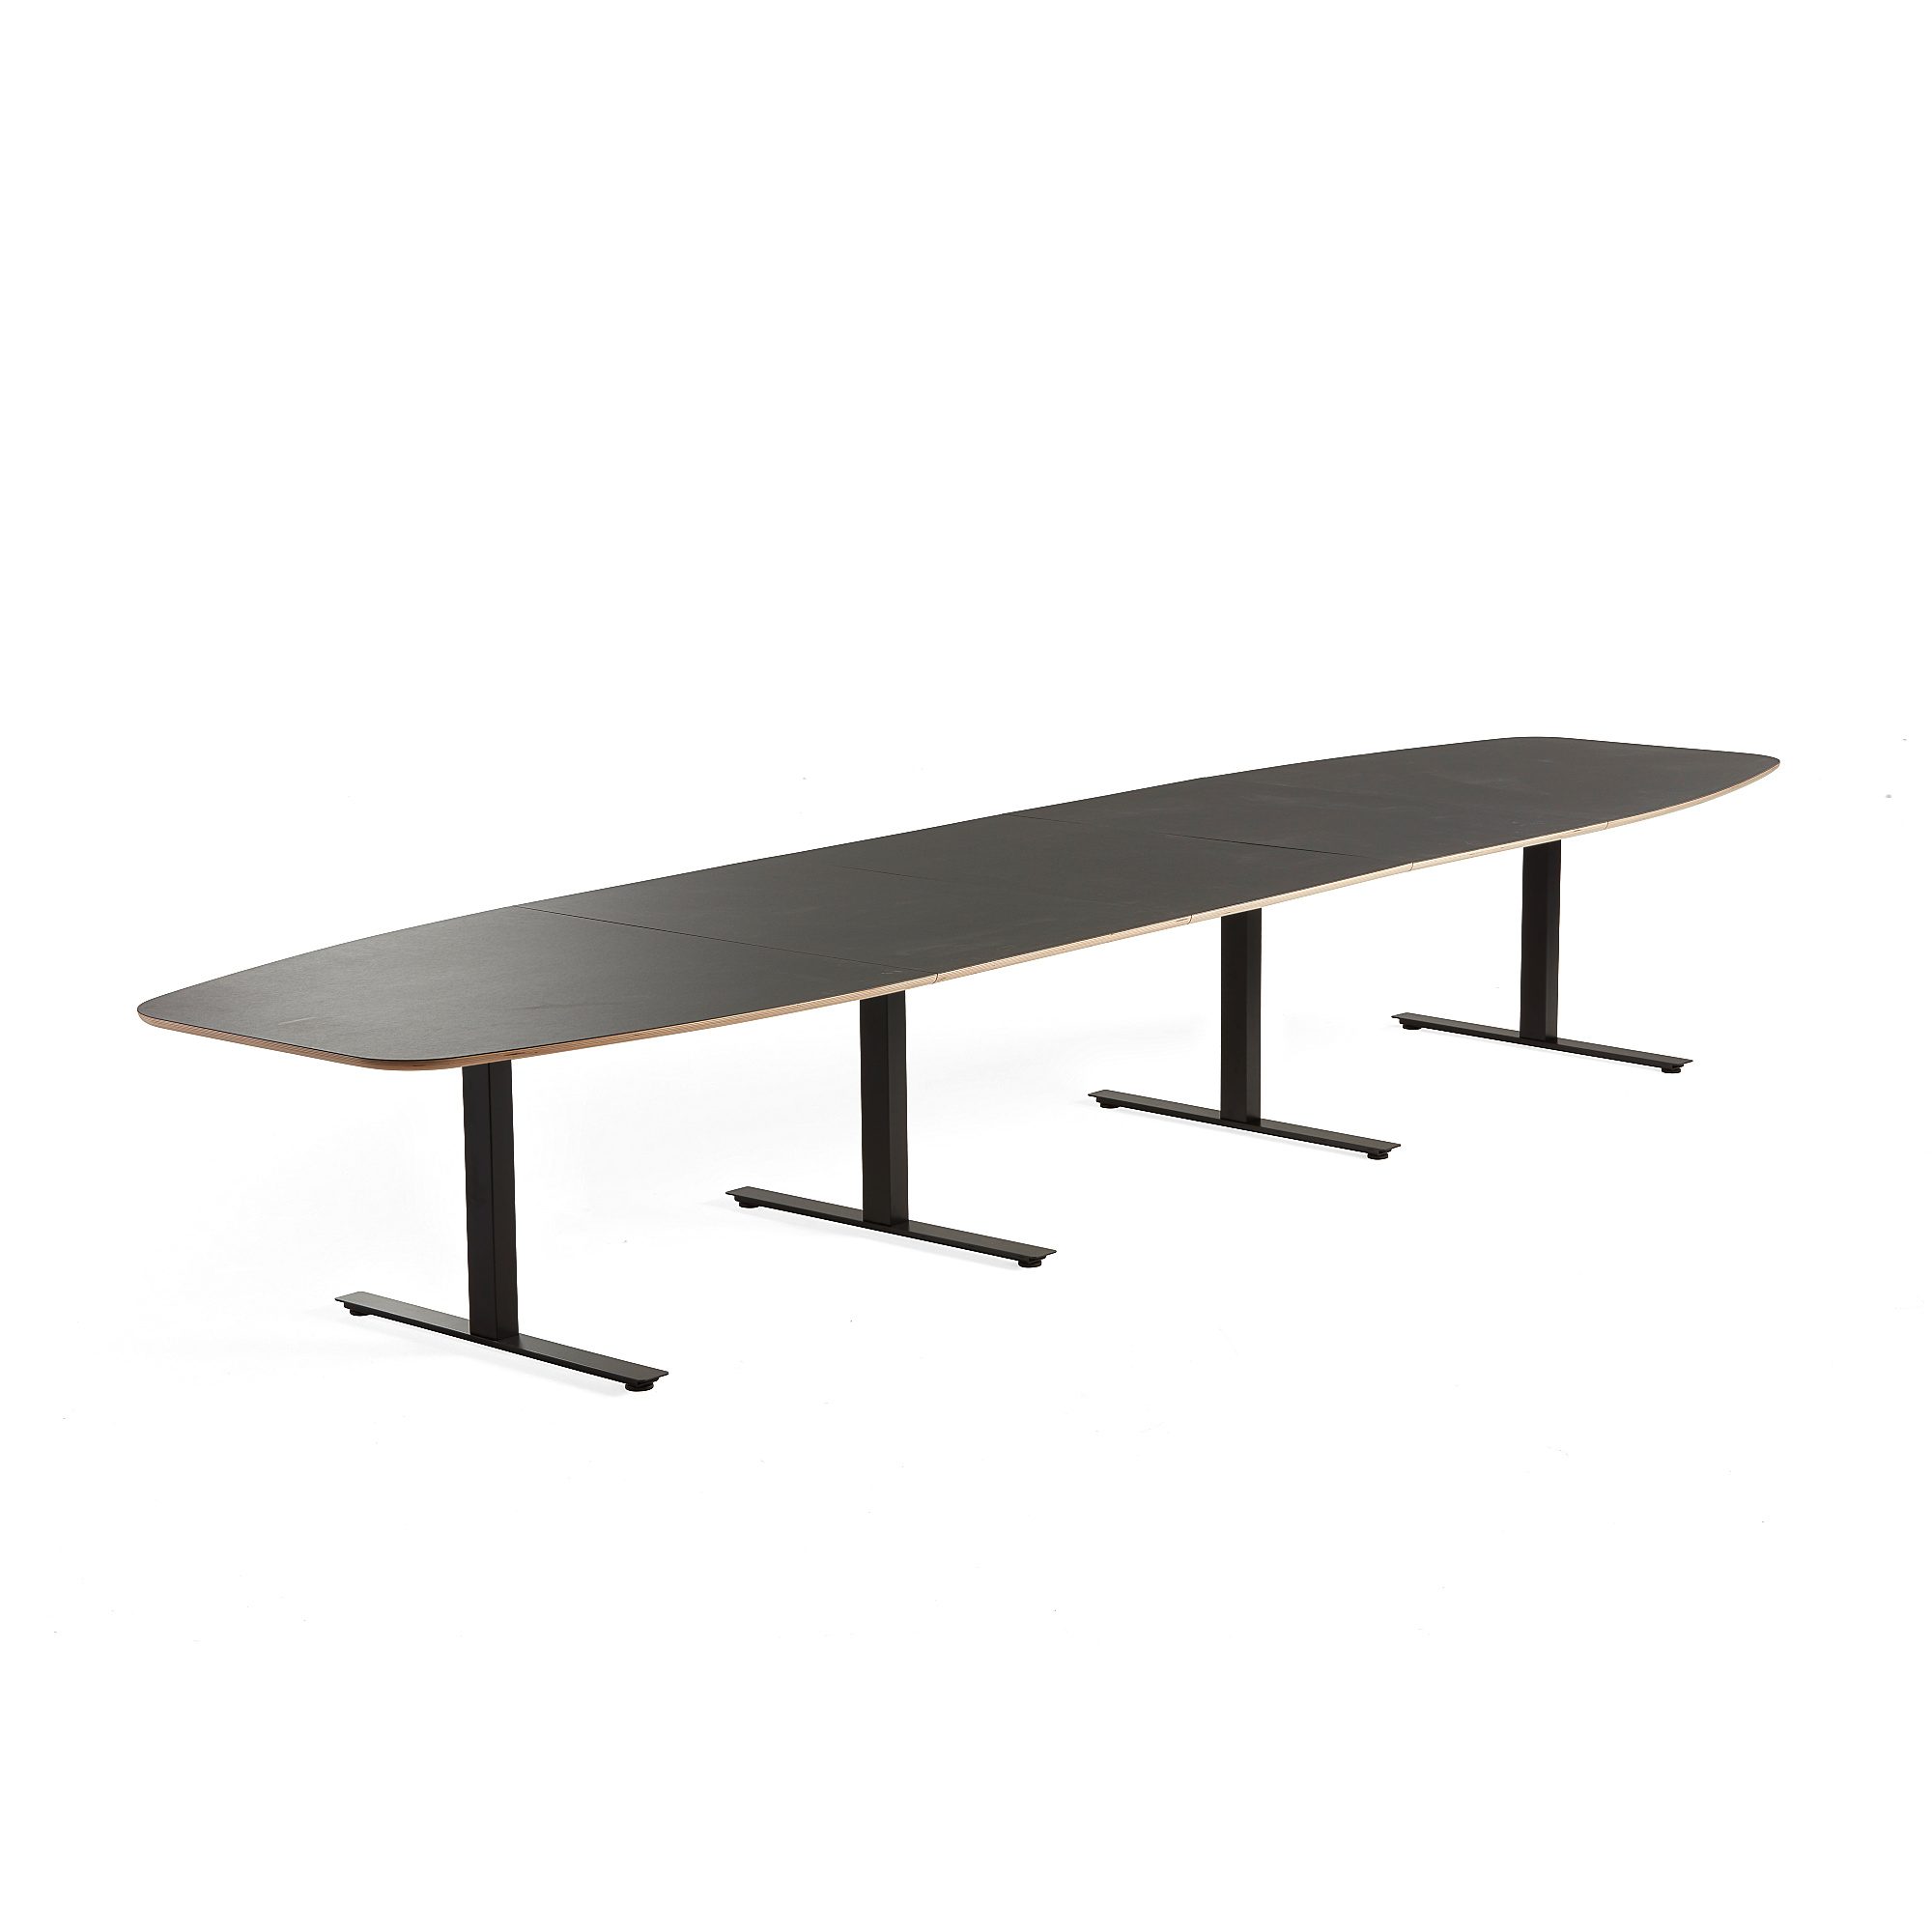 Rokovací stôl AUDREY, 4800x1200 mm, čierny podstavec, tmavošedá doska